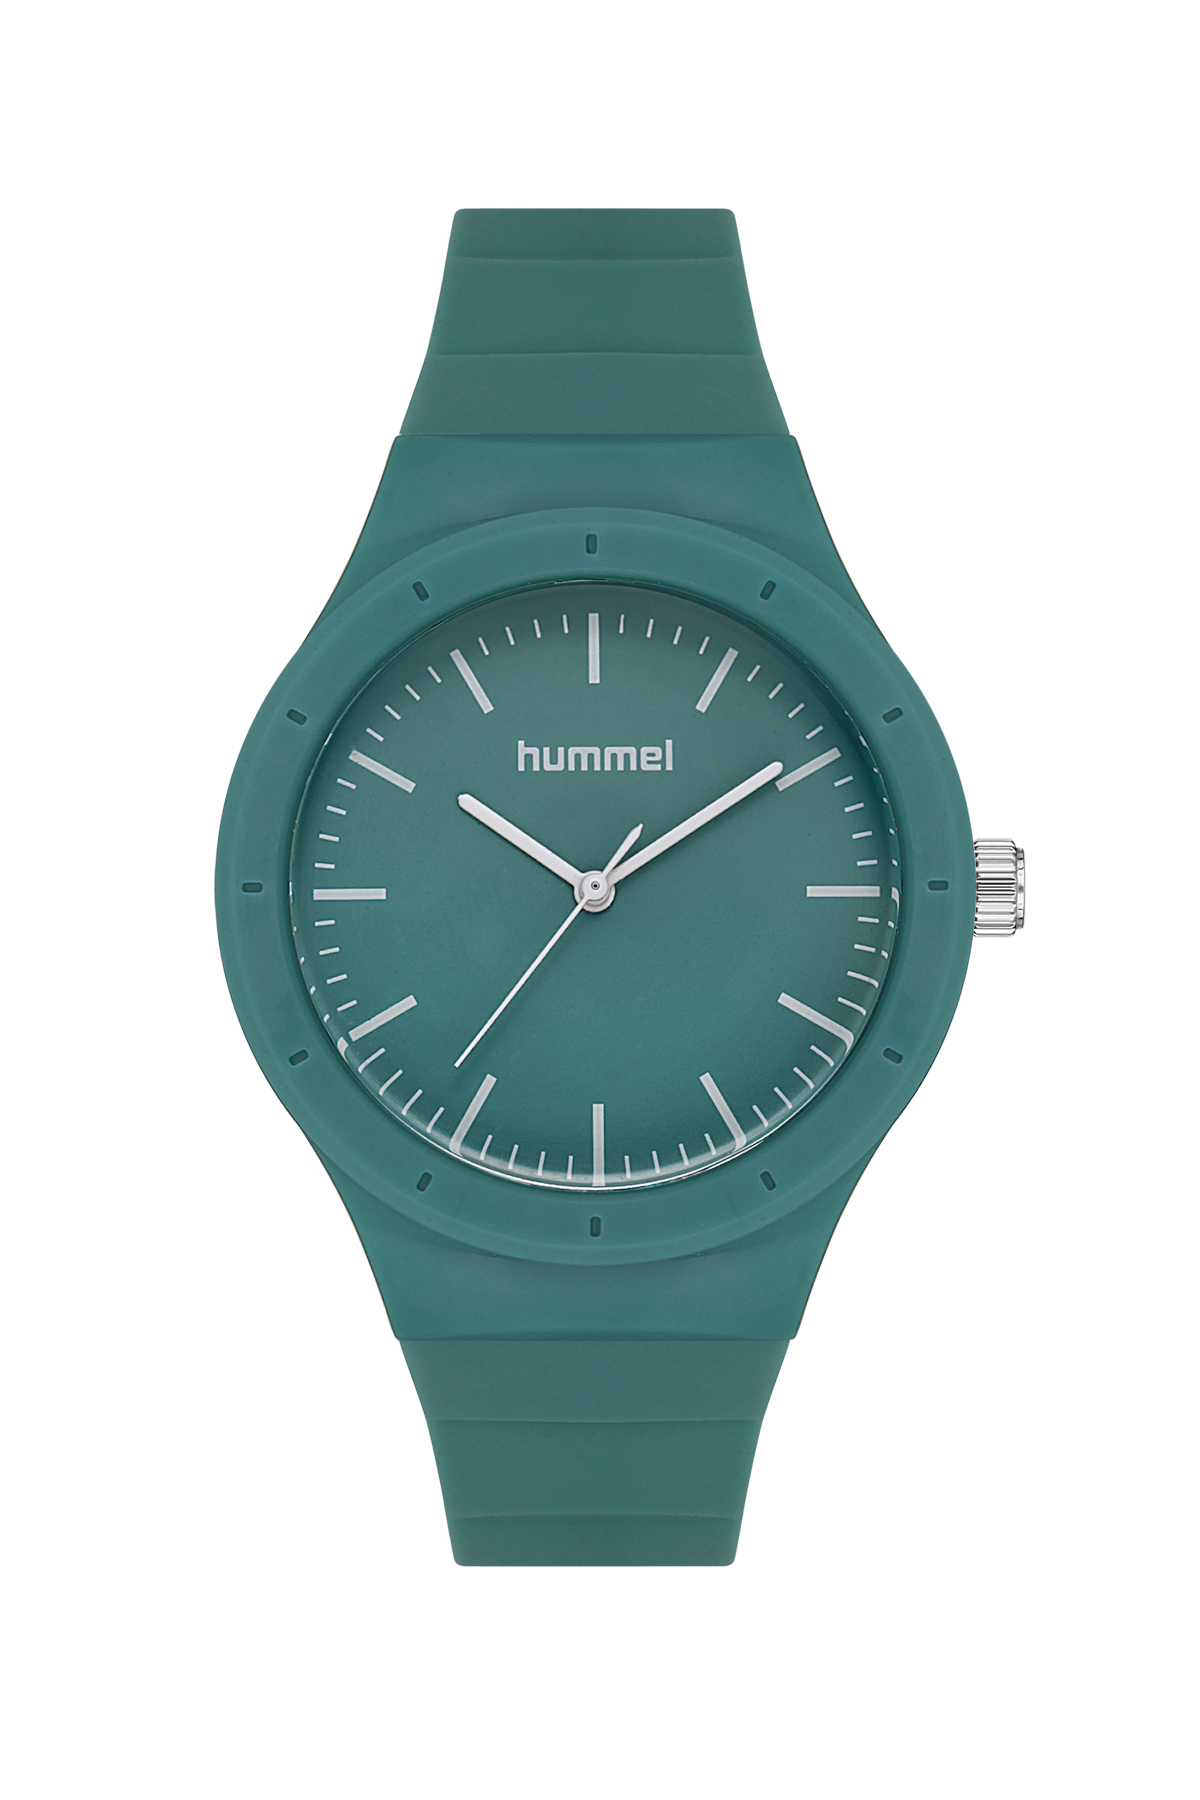 HUMMEL HM-1003LA-6